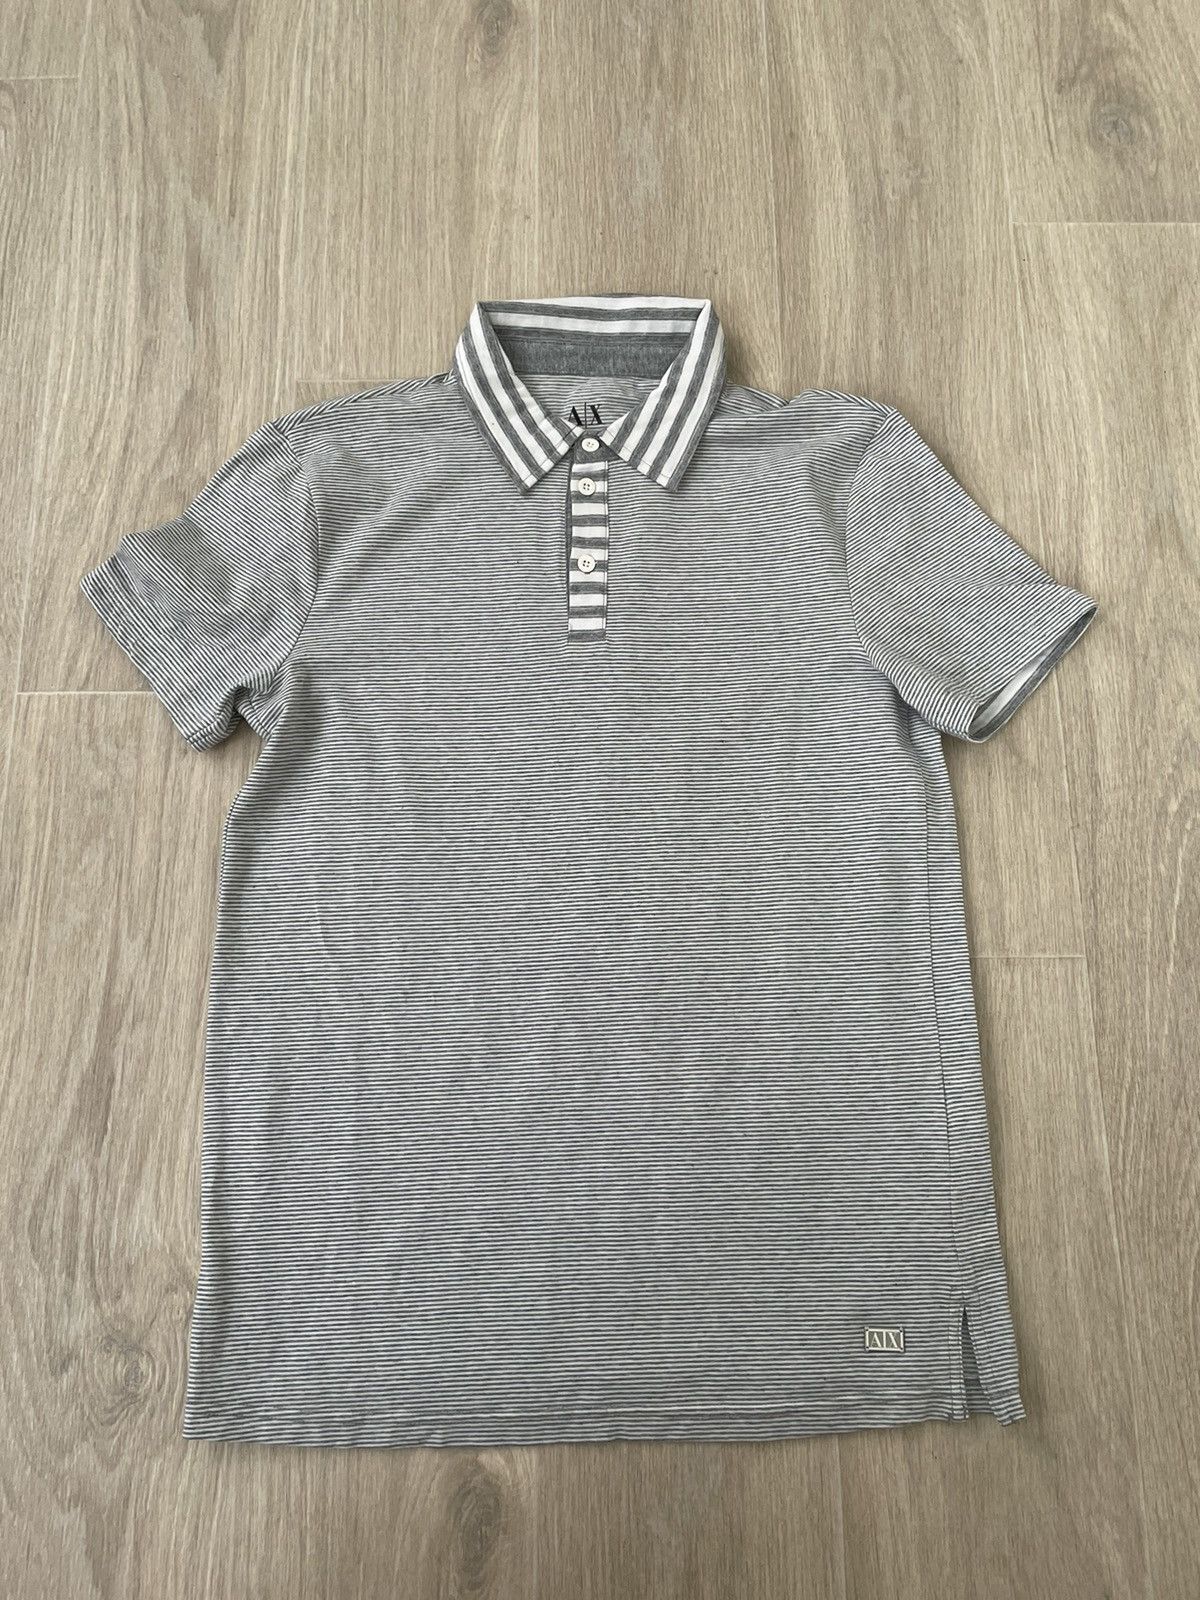 Streetwear Armani Exchange Polo shirt | Grailed